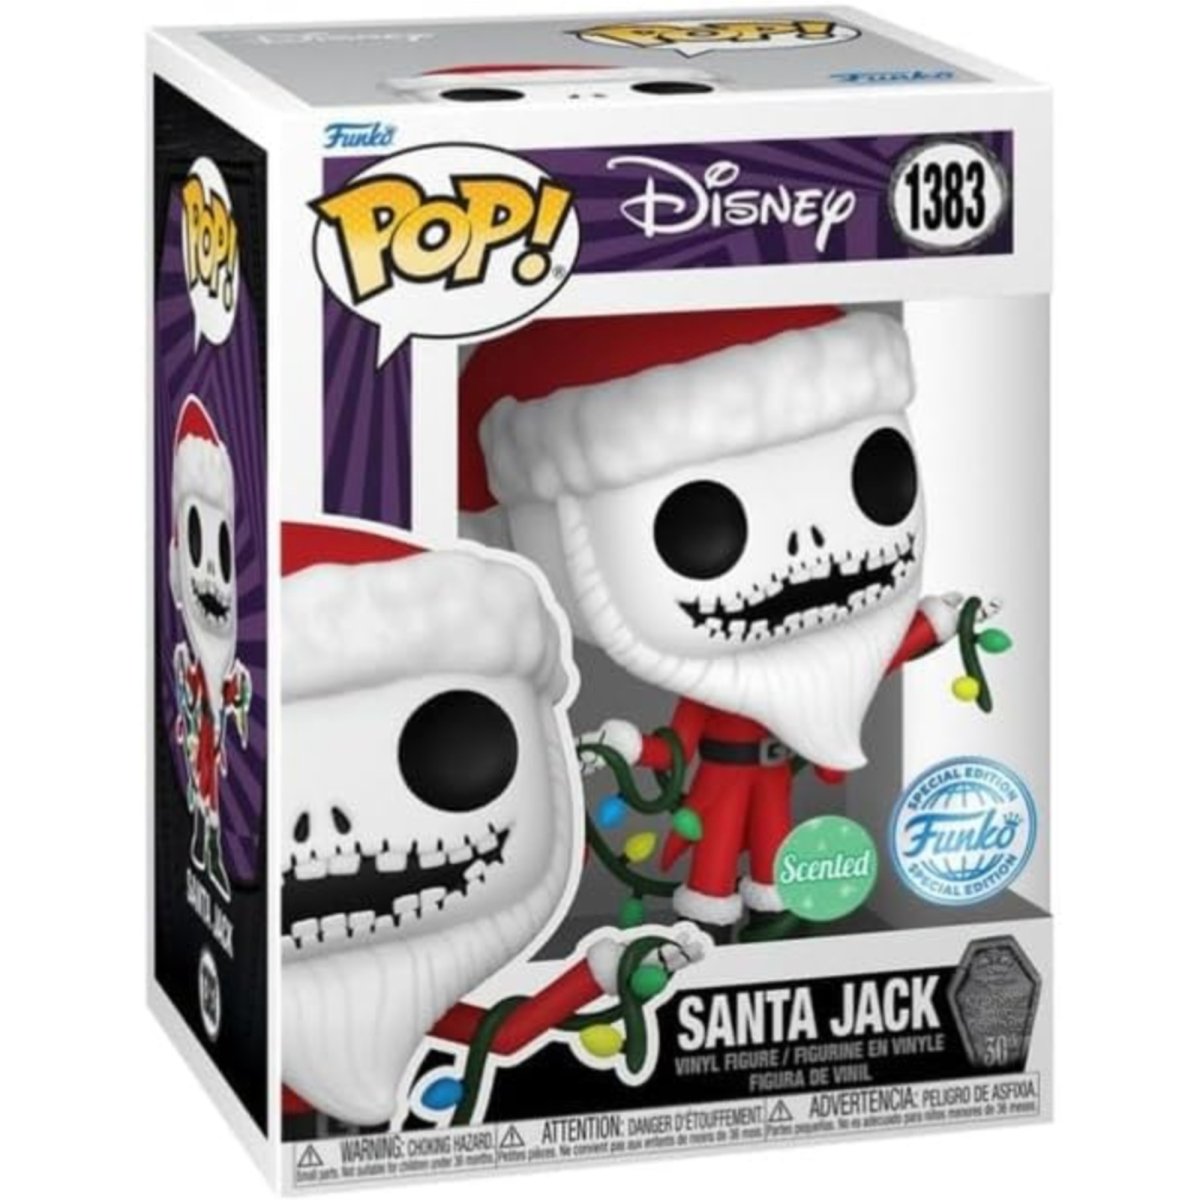 The Nightmare Before Christmas - Santa Jack (Scented Special Edition) #1383 - Funko Pop! Vinyl Disney - Persona Toys